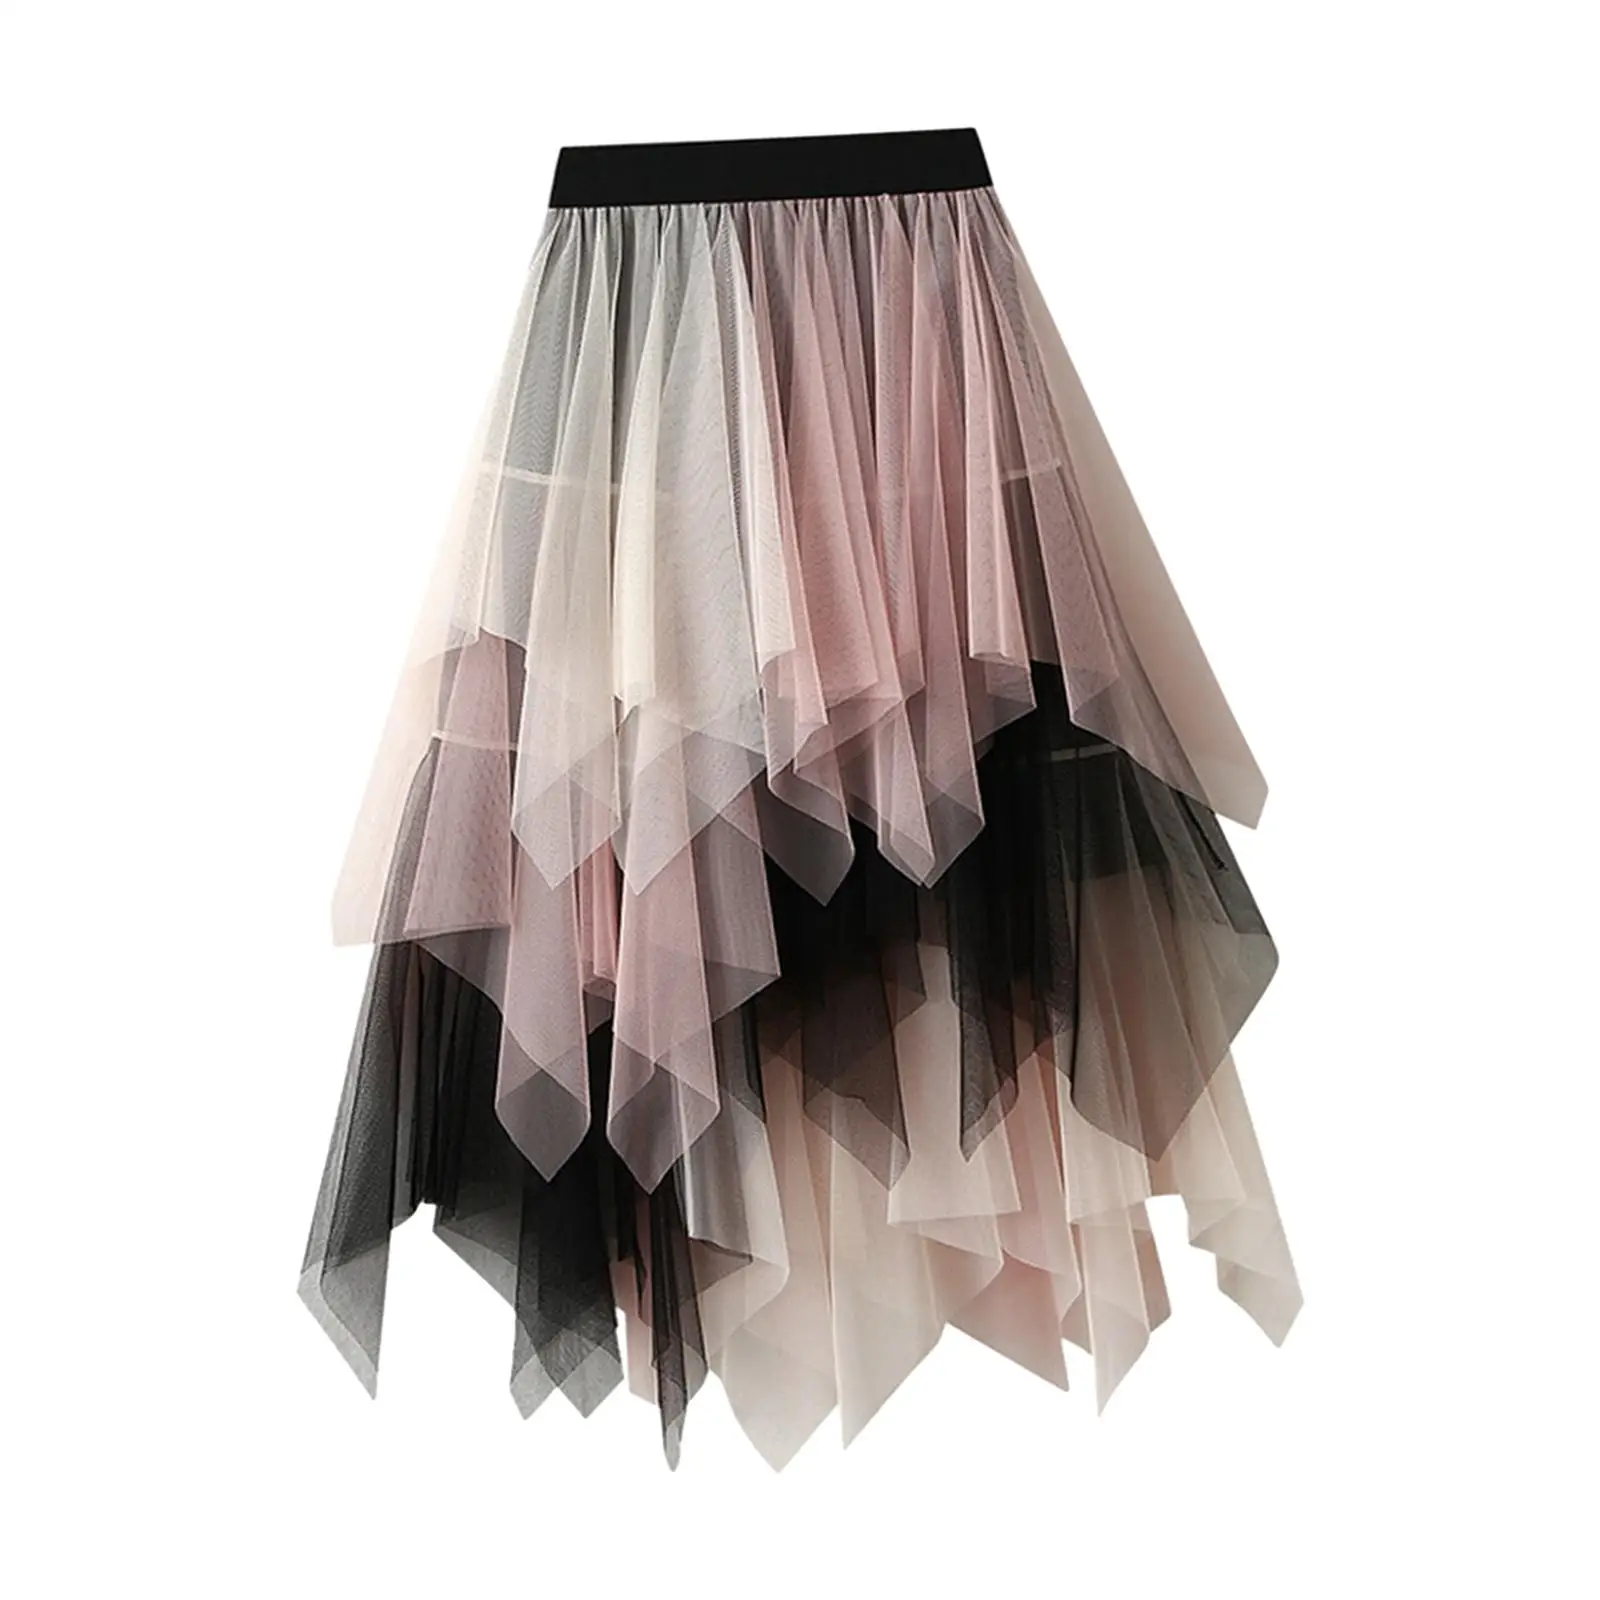 Tulle Skirts for Women Mesh Layered A Line Dress MIDI Length Elastic Waist Tutu Skirt for Formal Prom Wedding Halloween Dress up